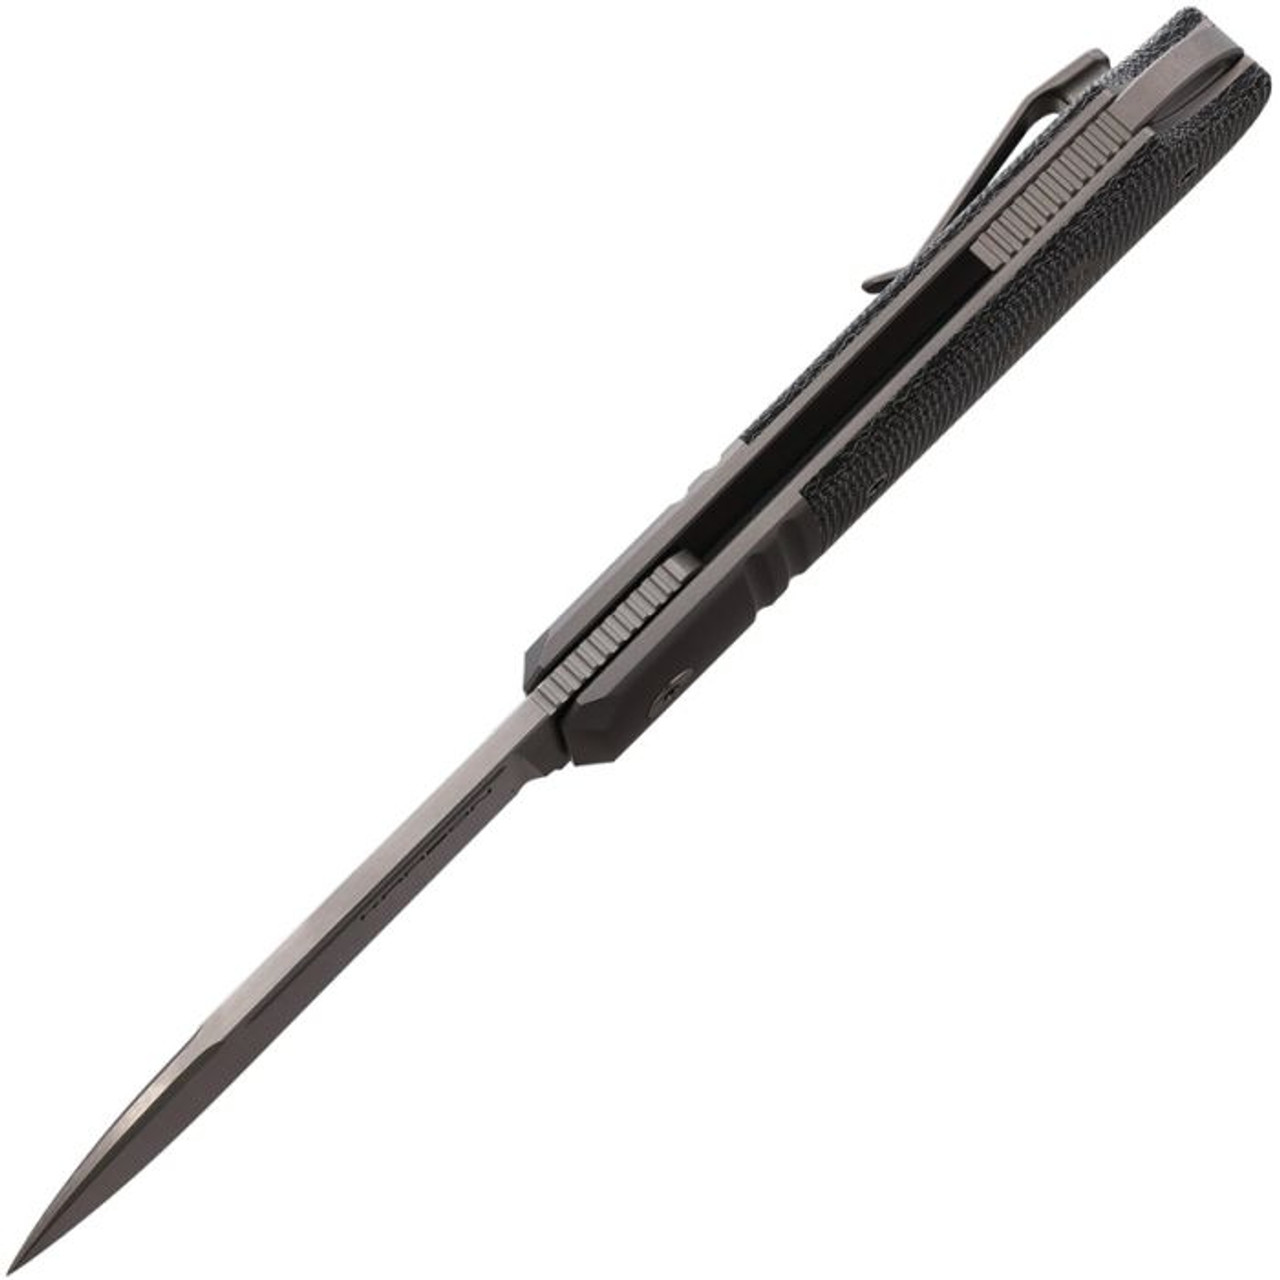 Karbon Knives Ahoy (KARB102) 3.12" Bohler M390 Satin Spear Point Blade, Black Micarta Handle w/ Titanium Bolster